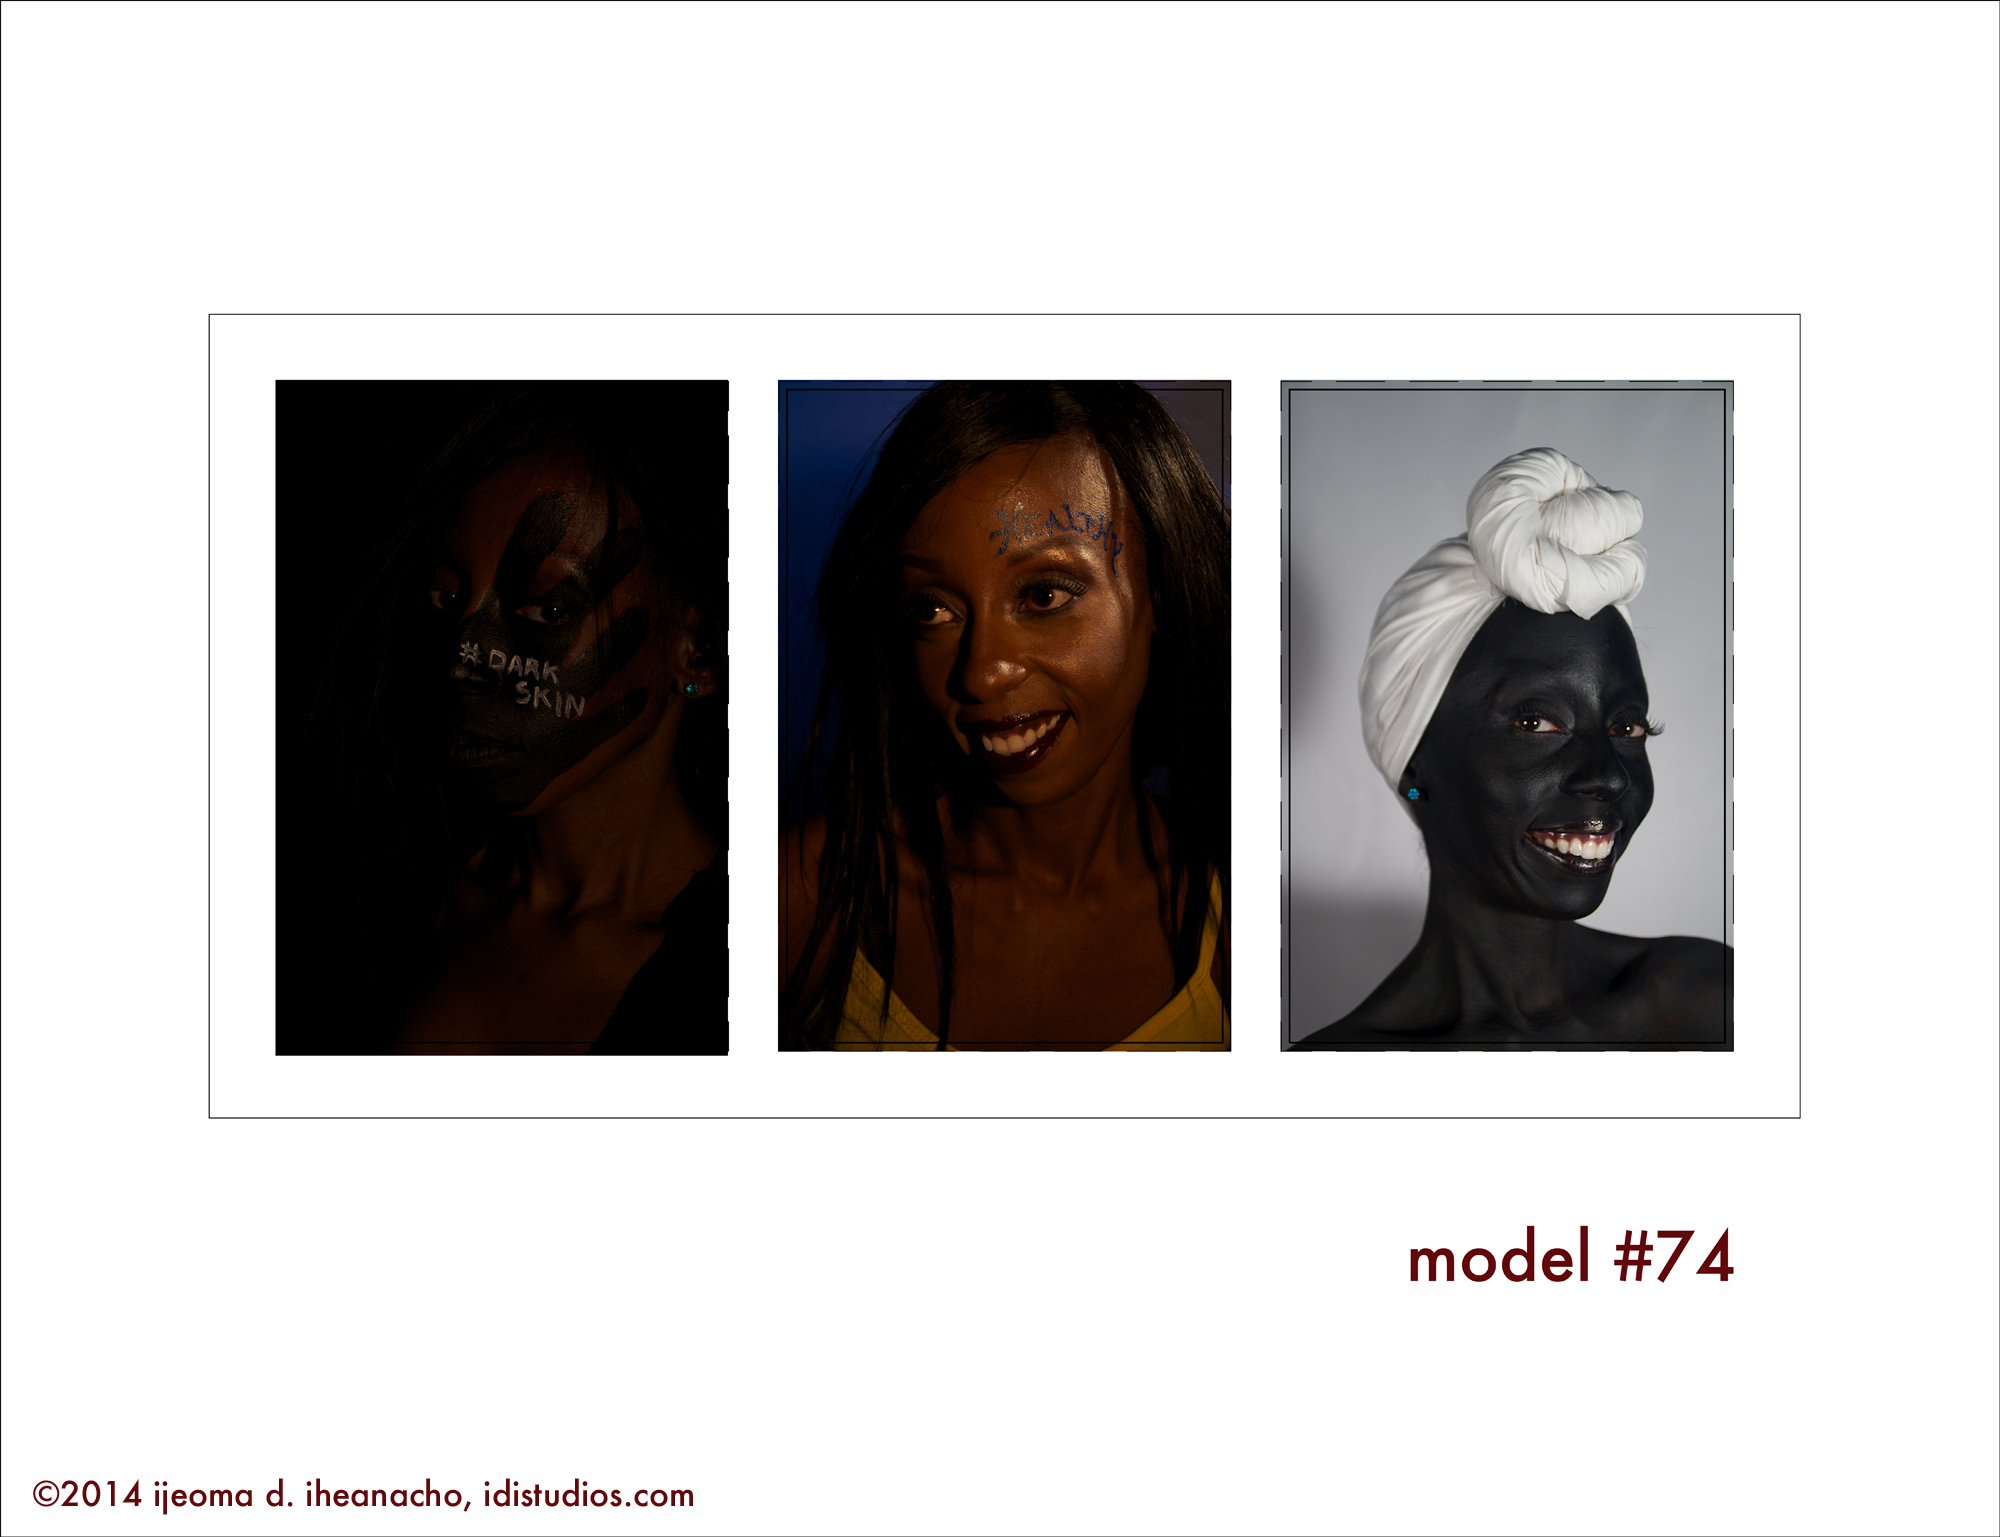 the reImagining Series: Model #74 Gallery Plate